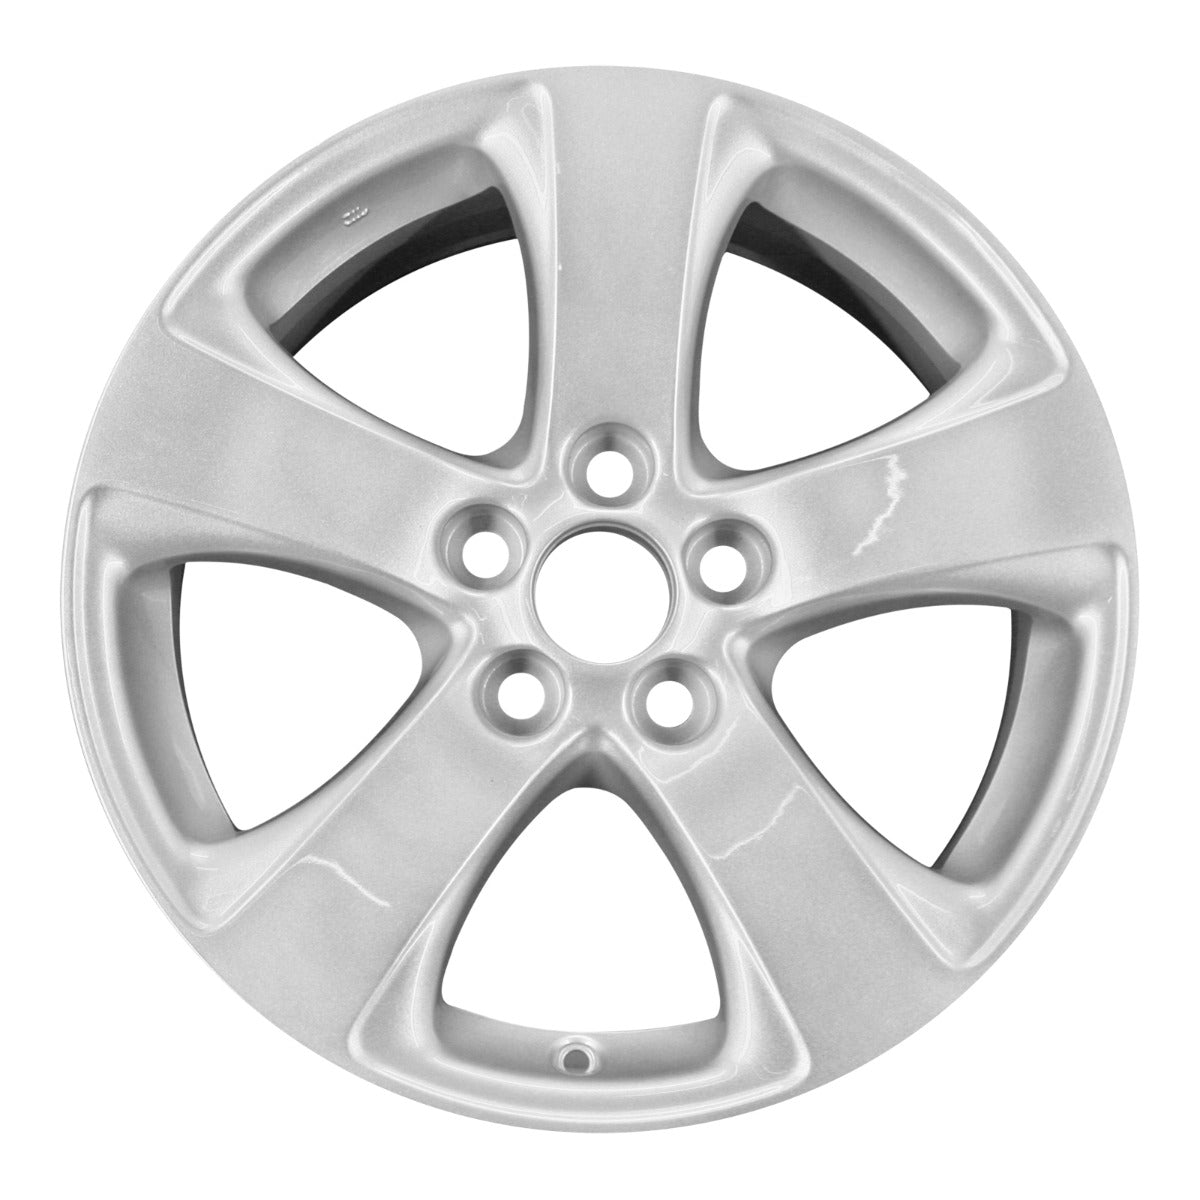 2019 Toyota Sienna 17" OEM Wheel Rim W69584S